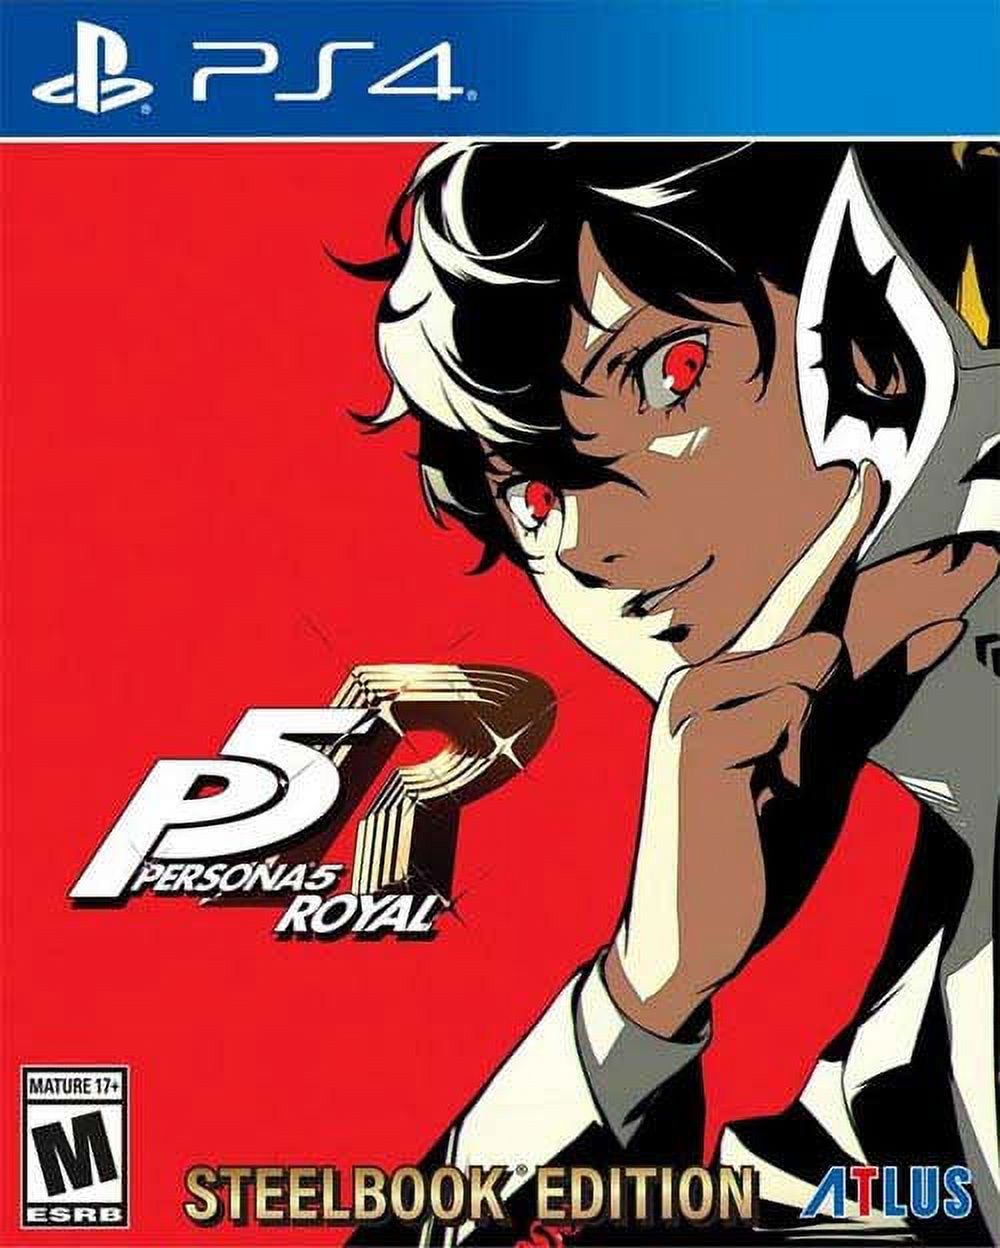 Persona 5 Royal Steelbook Edition, SEGA, PlayStation 4, 730865220274 - image 1 of 8